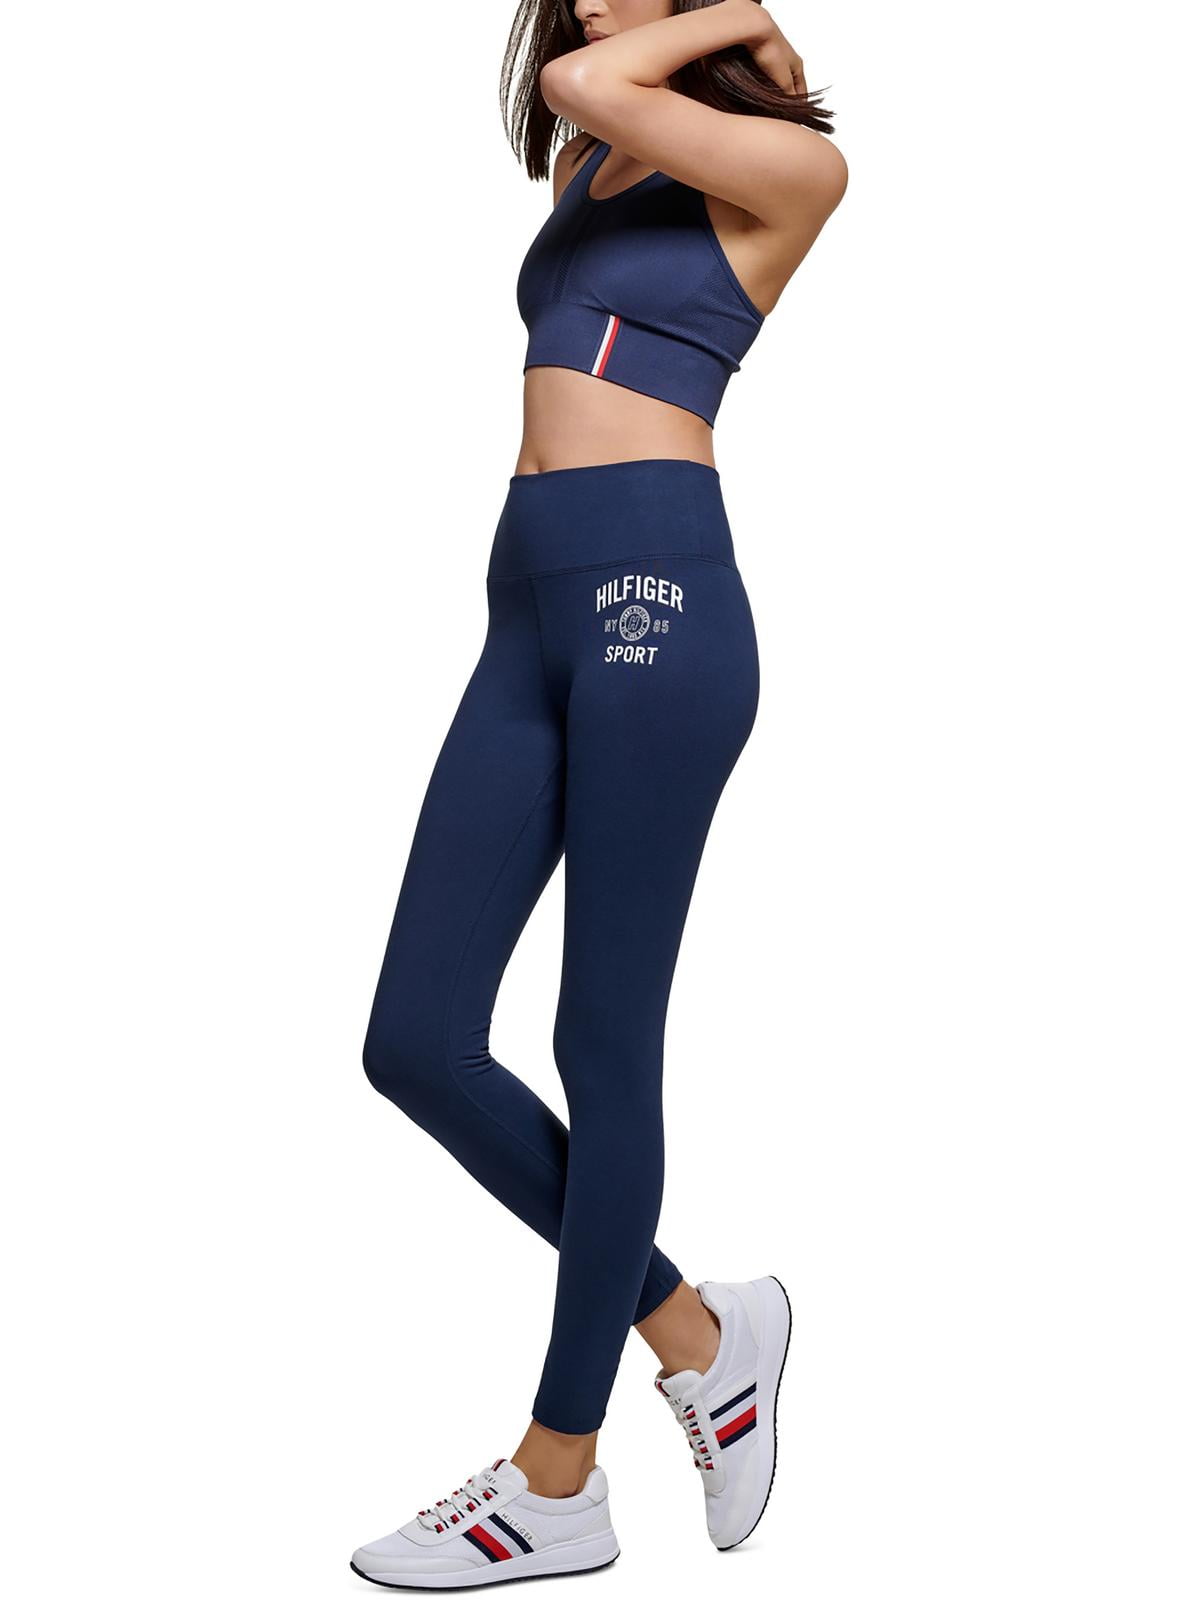 Tommy Hilfiger Sport Womens Gym Fitness Athletic Leggings